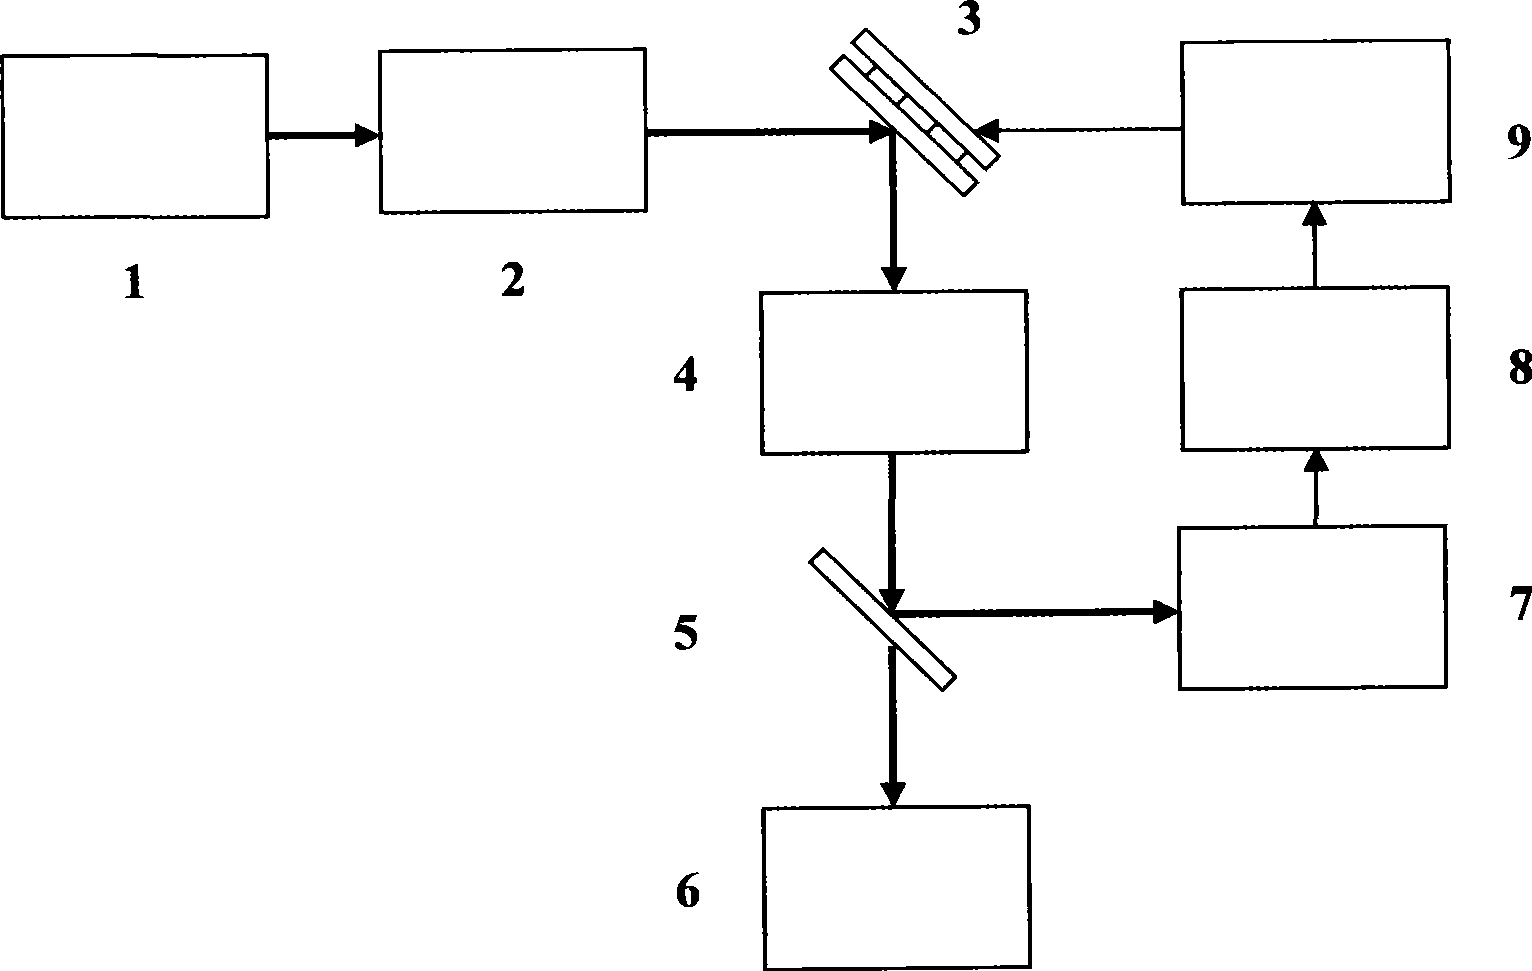 Beam deflection and purification apparatus based on random paralleling optimization algorithm